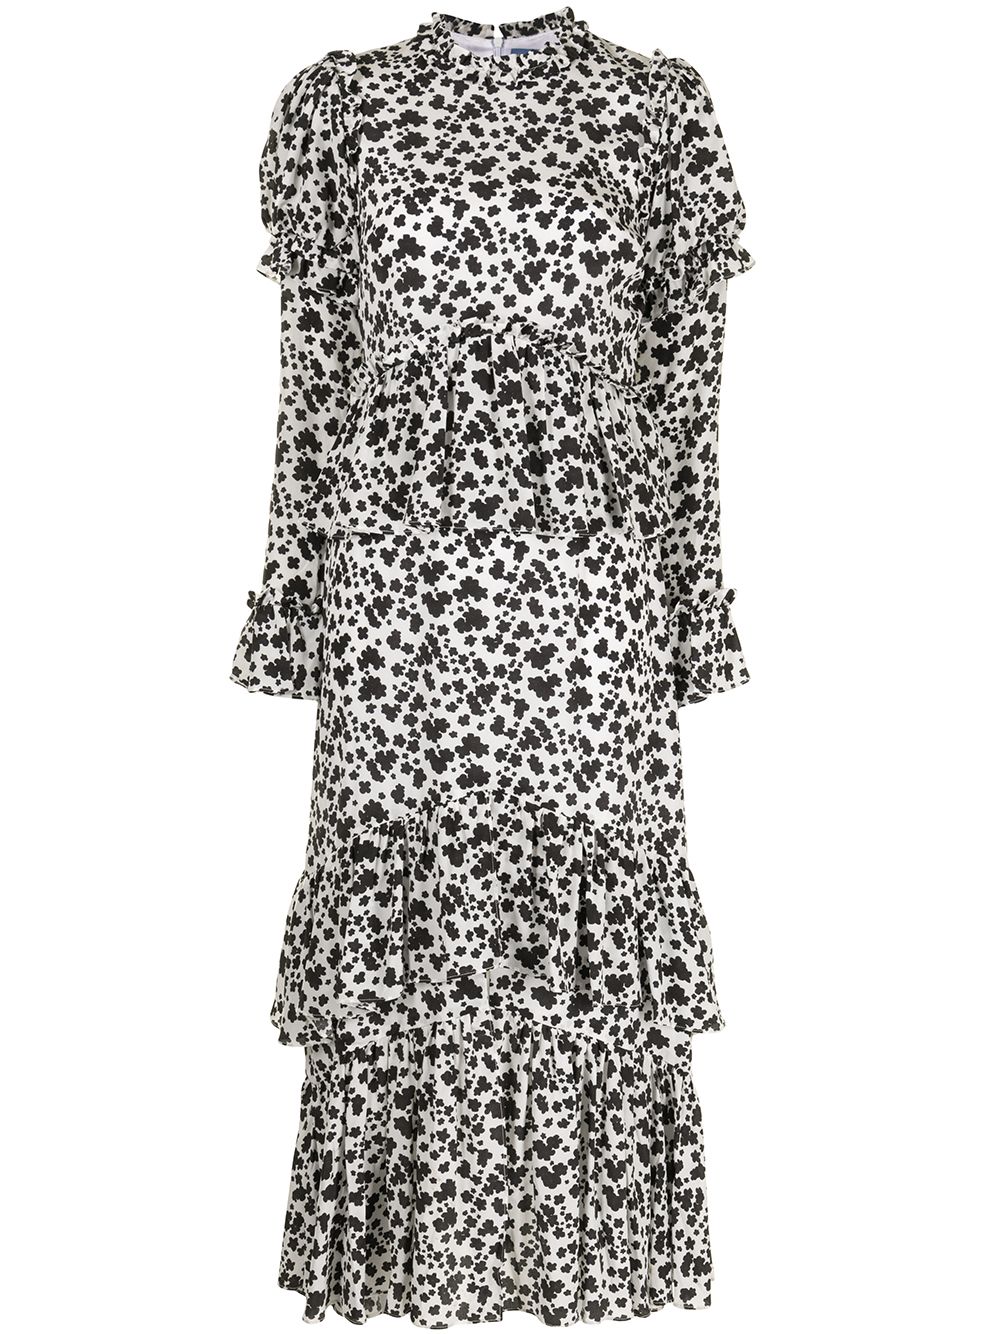 Macgraw Parterre Blossom Print Dress - Farfetch